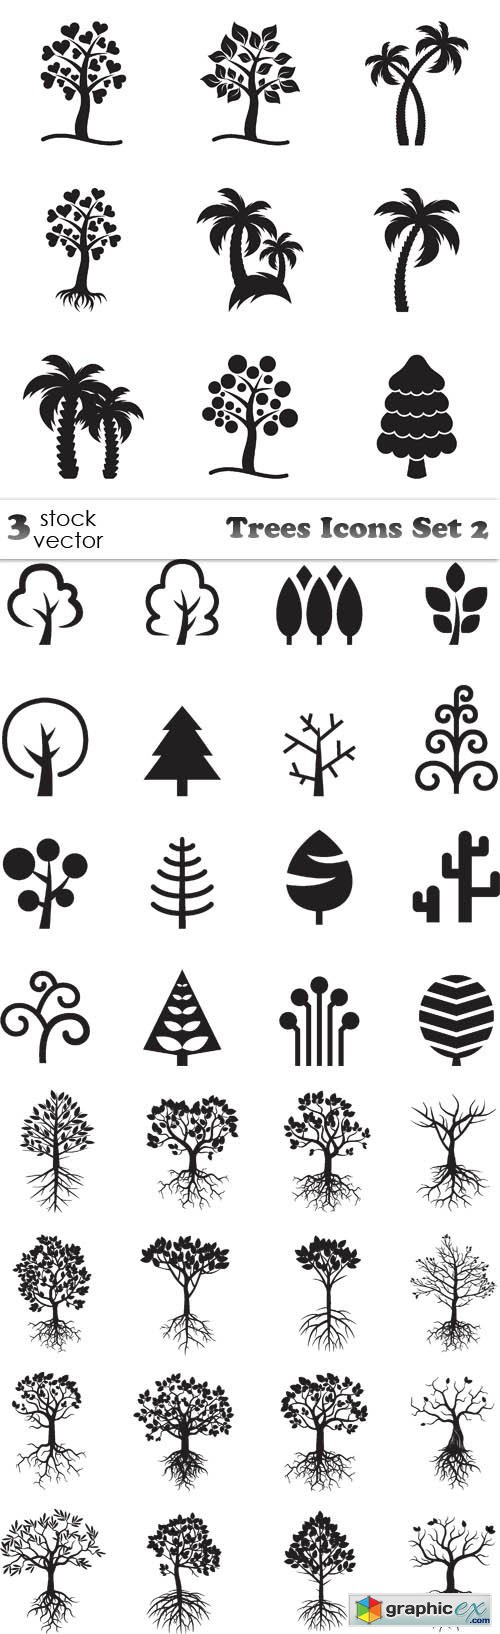 Trees Icons Set 2